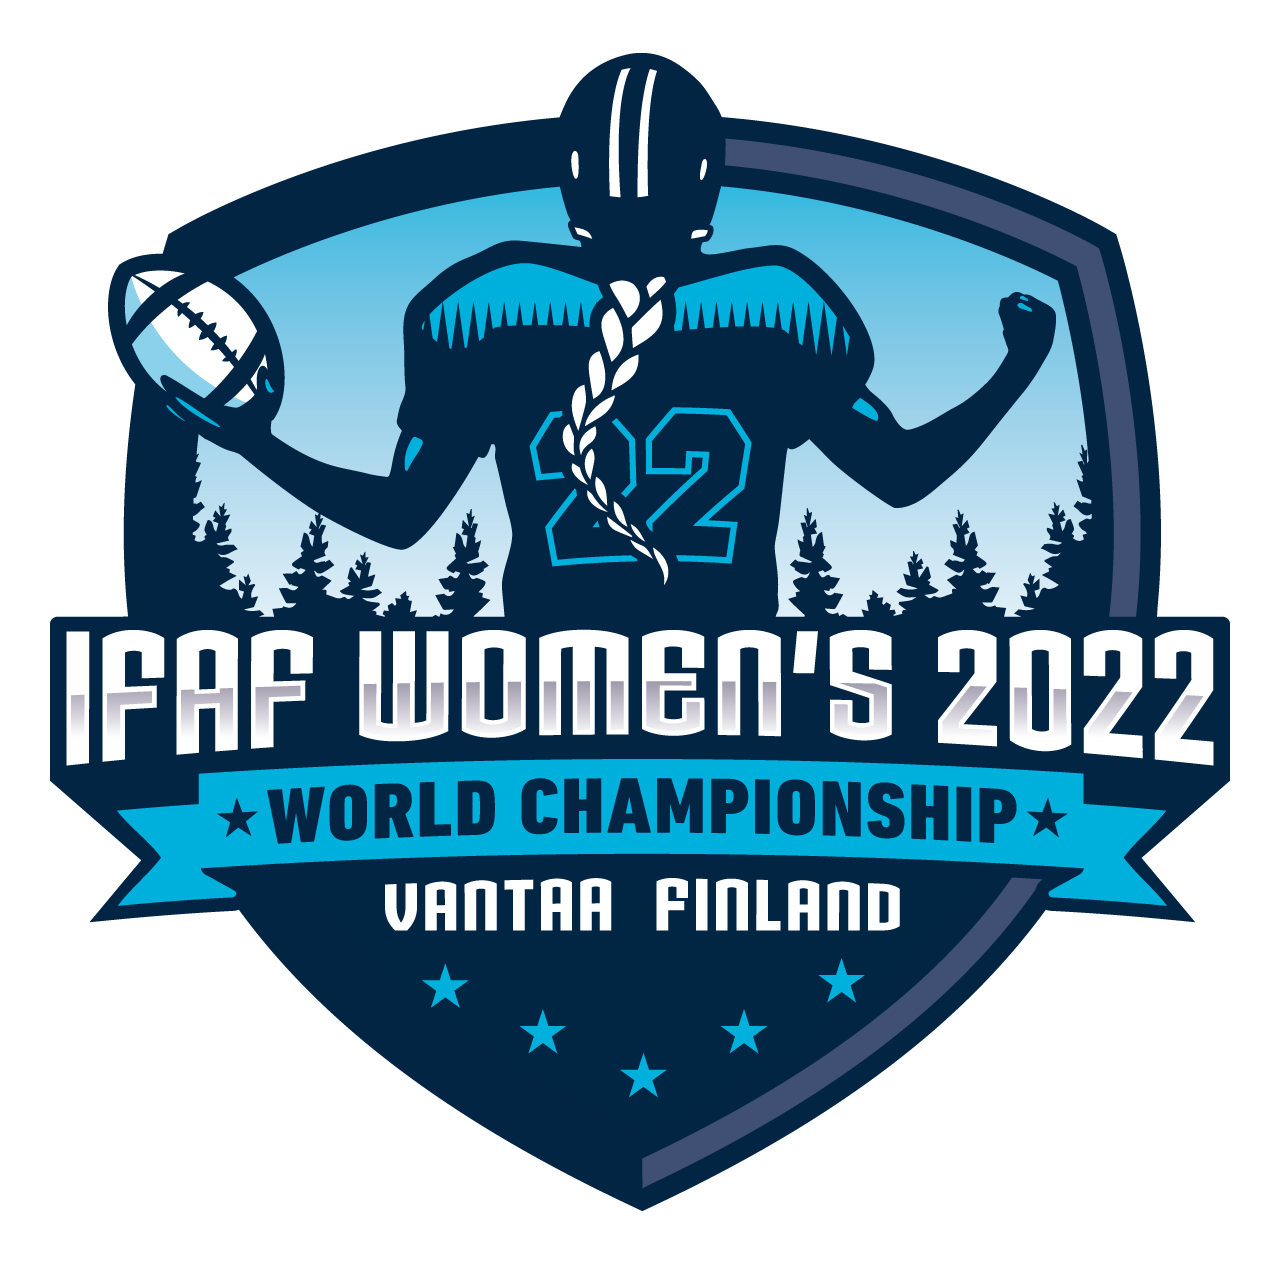 IFAF Women’s 2022 World Championship